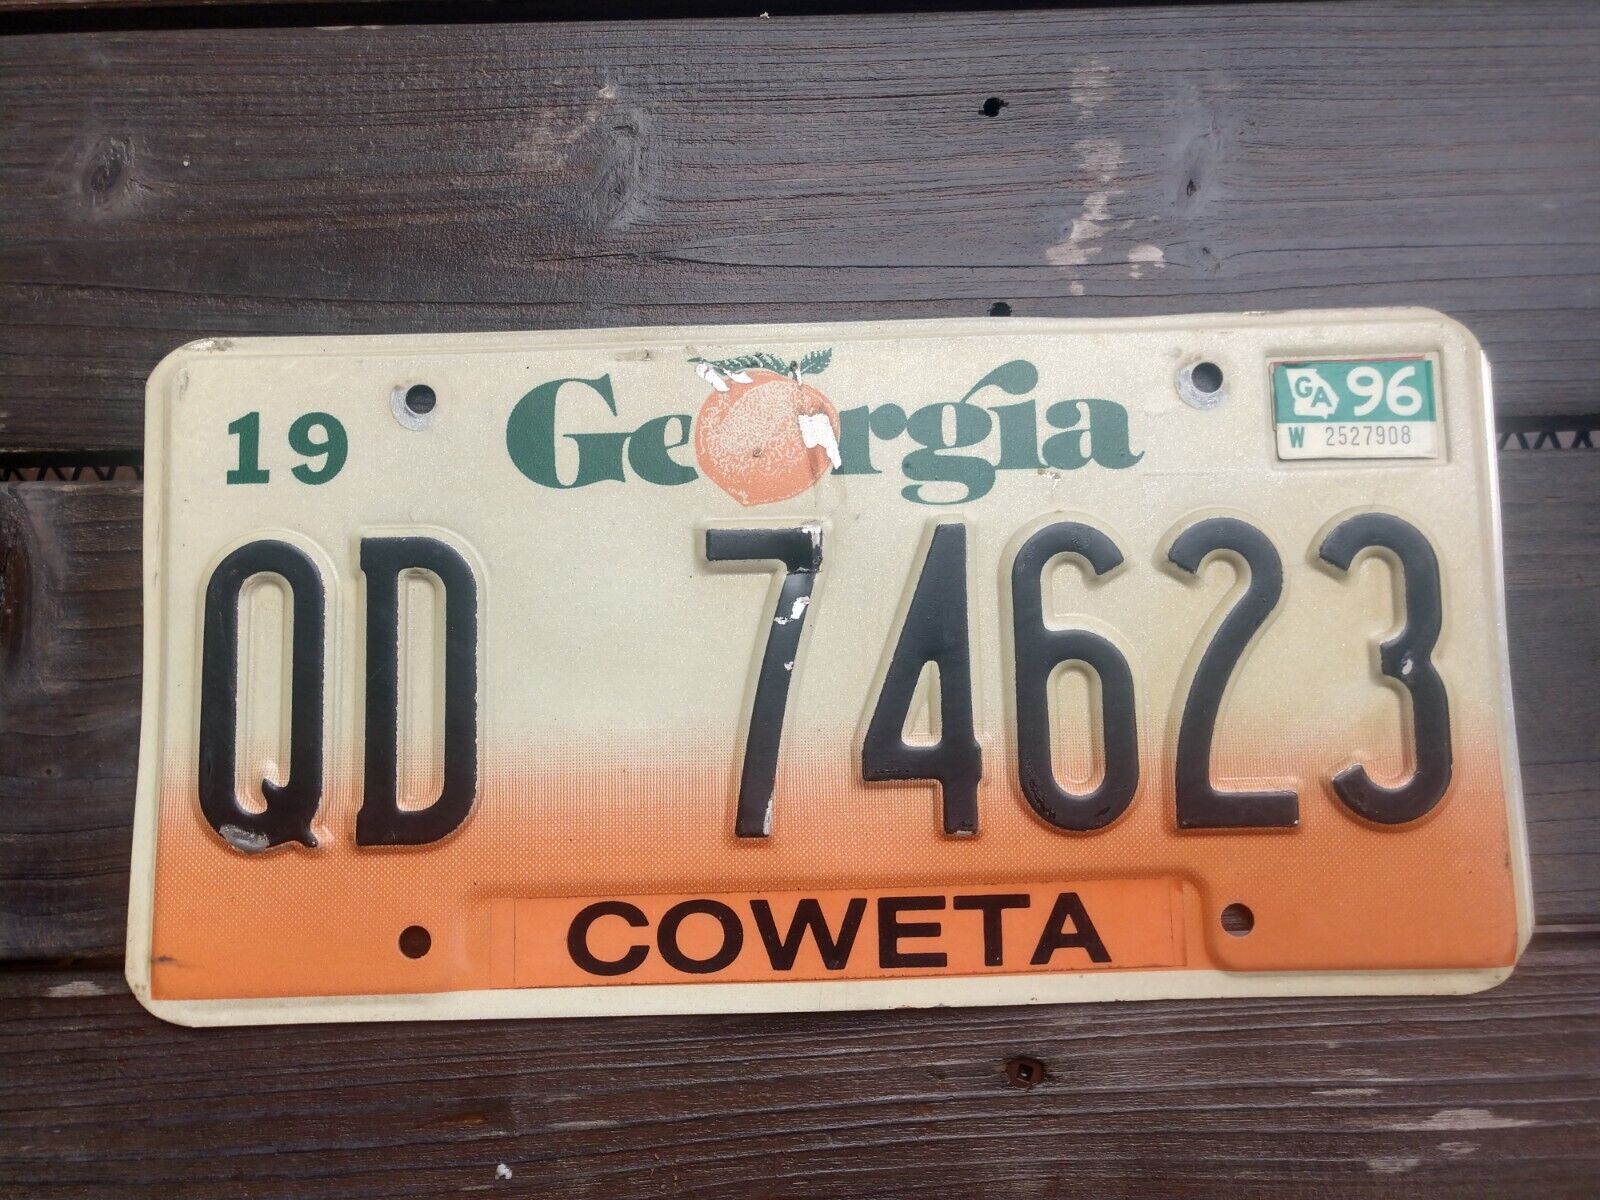 Vintage 1990 Georgia License Plate, QD-74623, thru \'96 stickers  ~ Coweta County